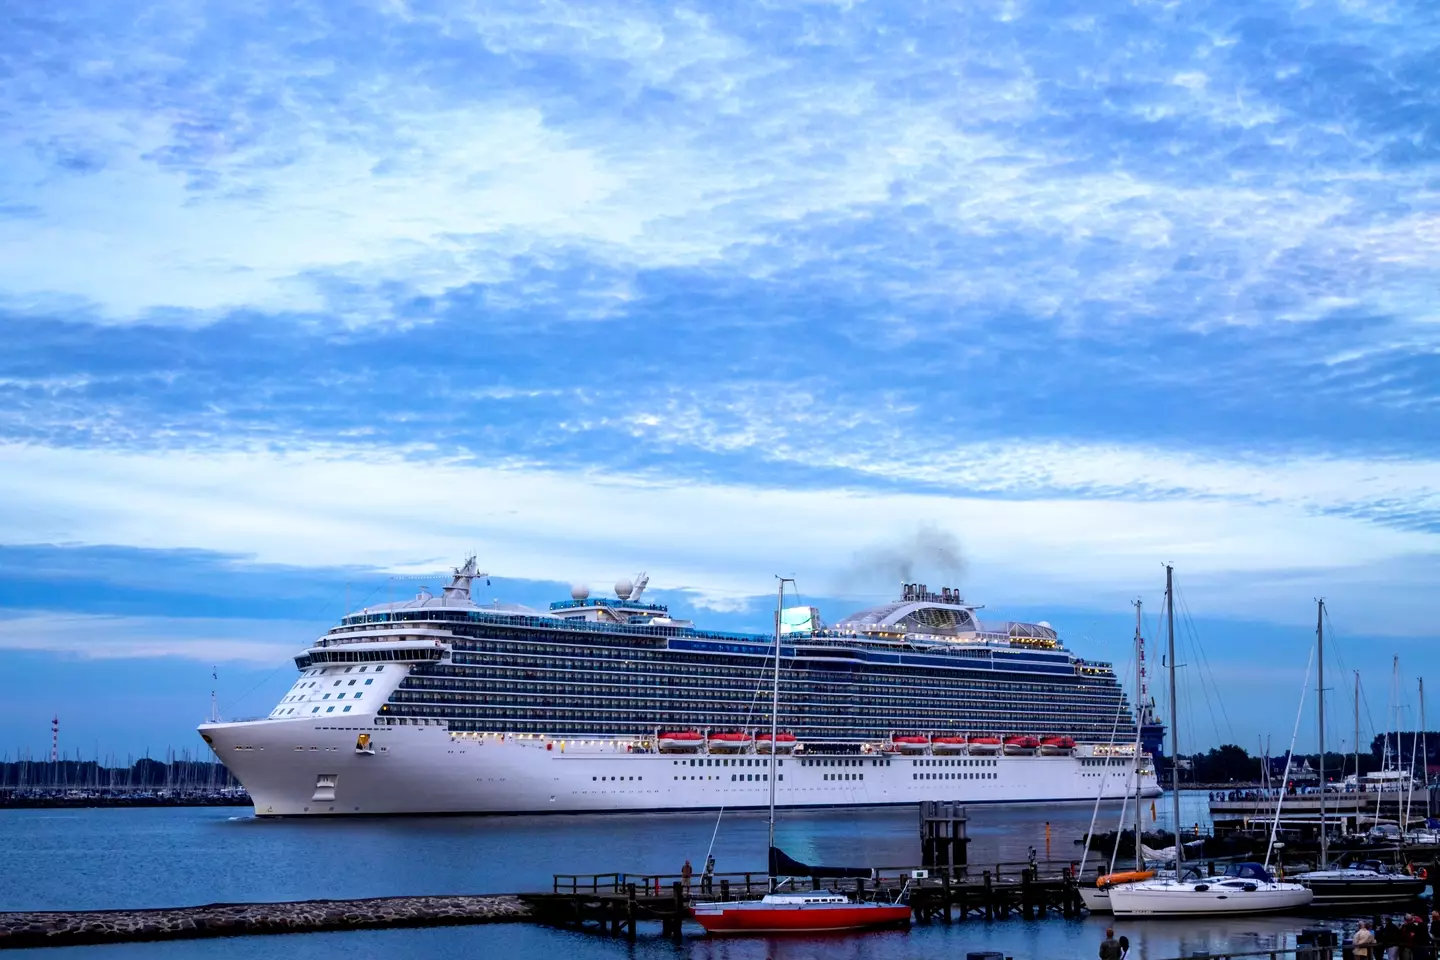 Cruise ships take thousands of staff to make them run.